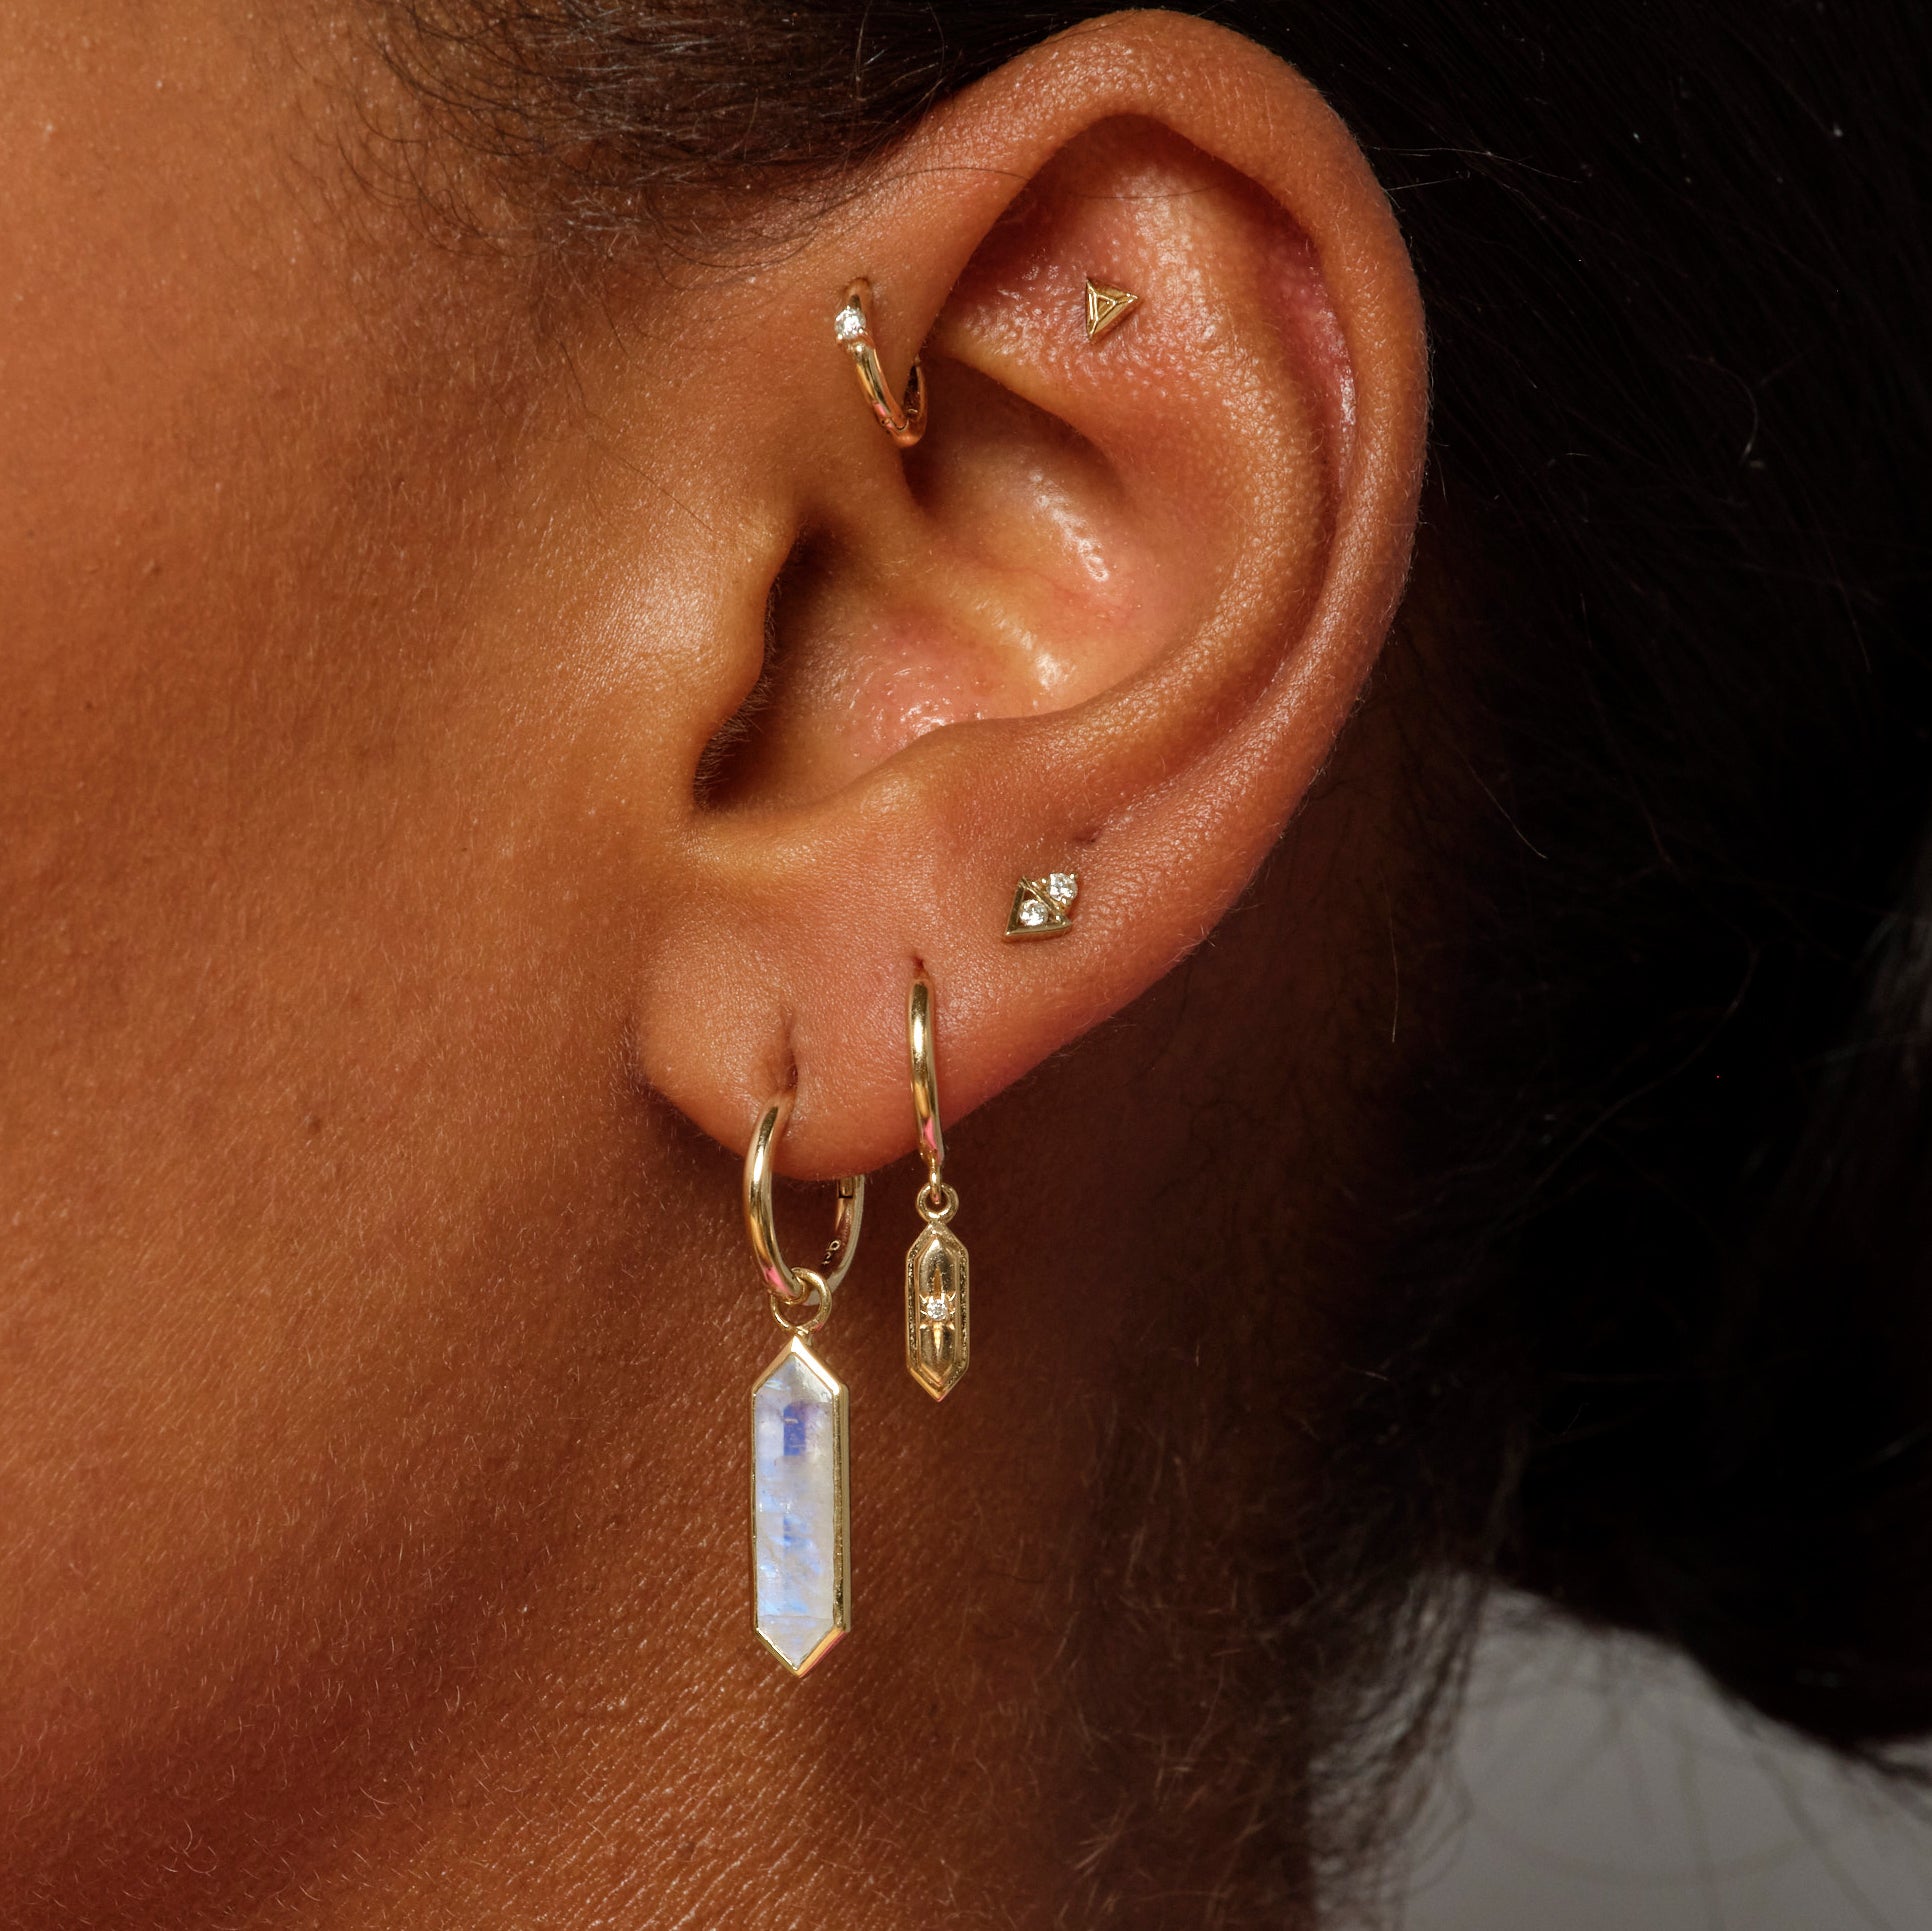 AZ Emerald & Diamond Tri Single Stud Earring